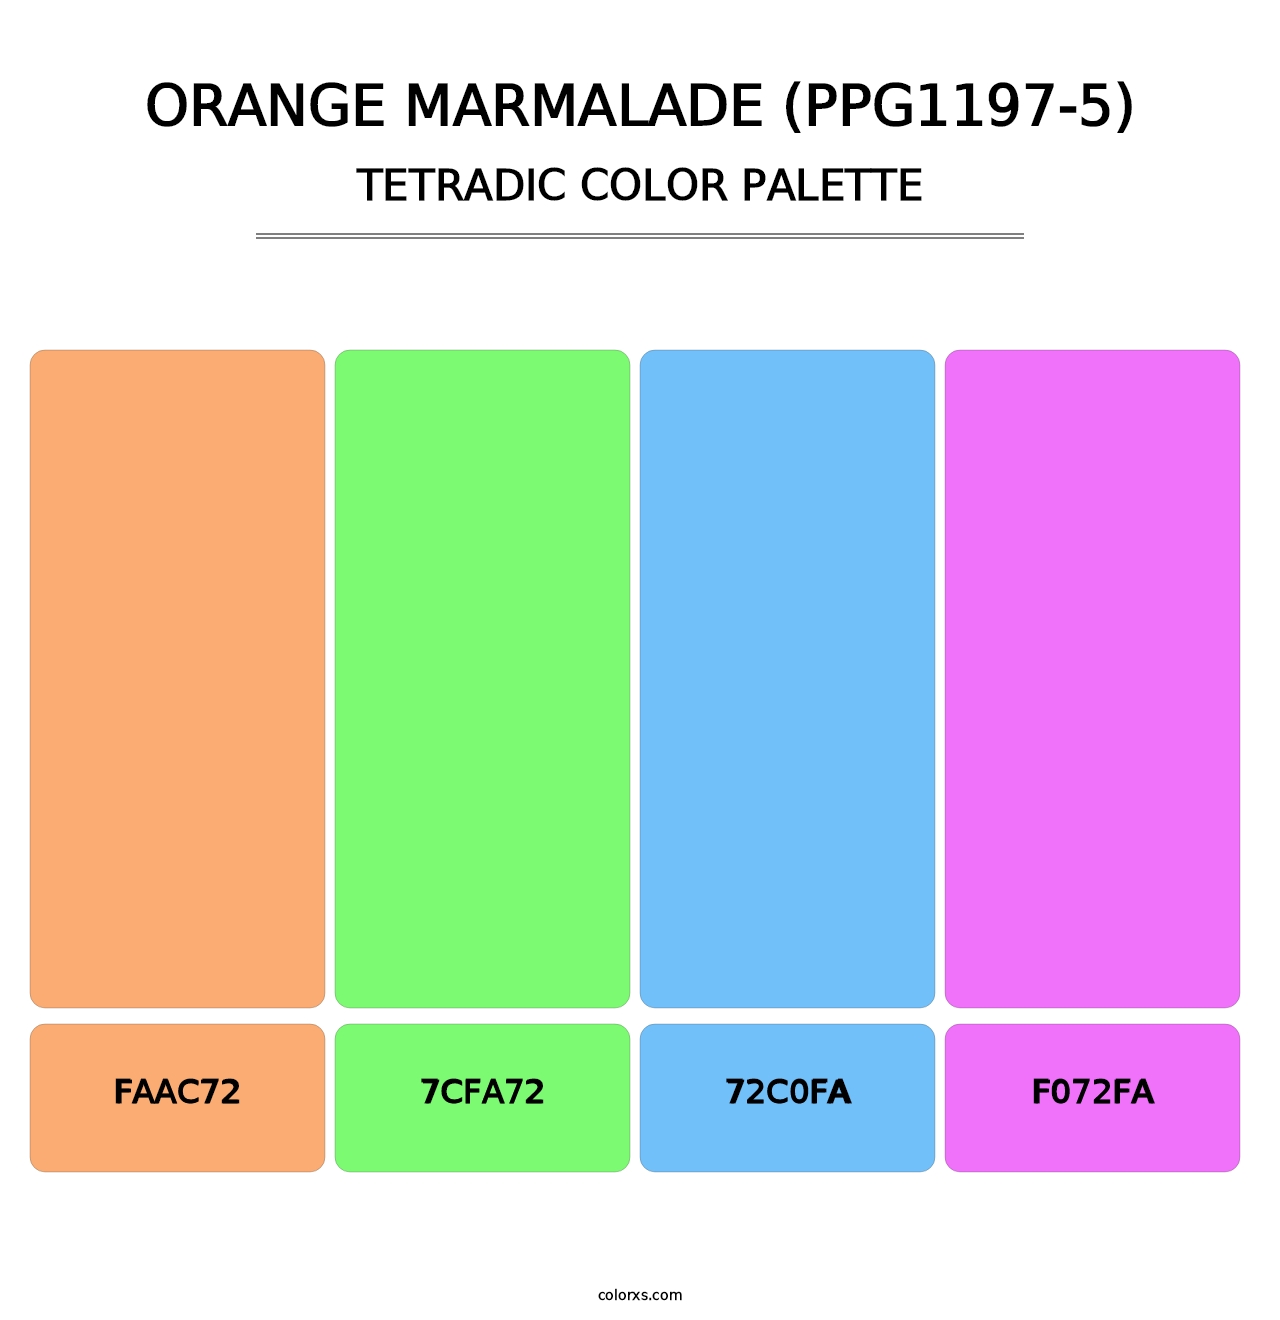 Orange Marmalade (PPG1197-5) - Tetradic Color Palette